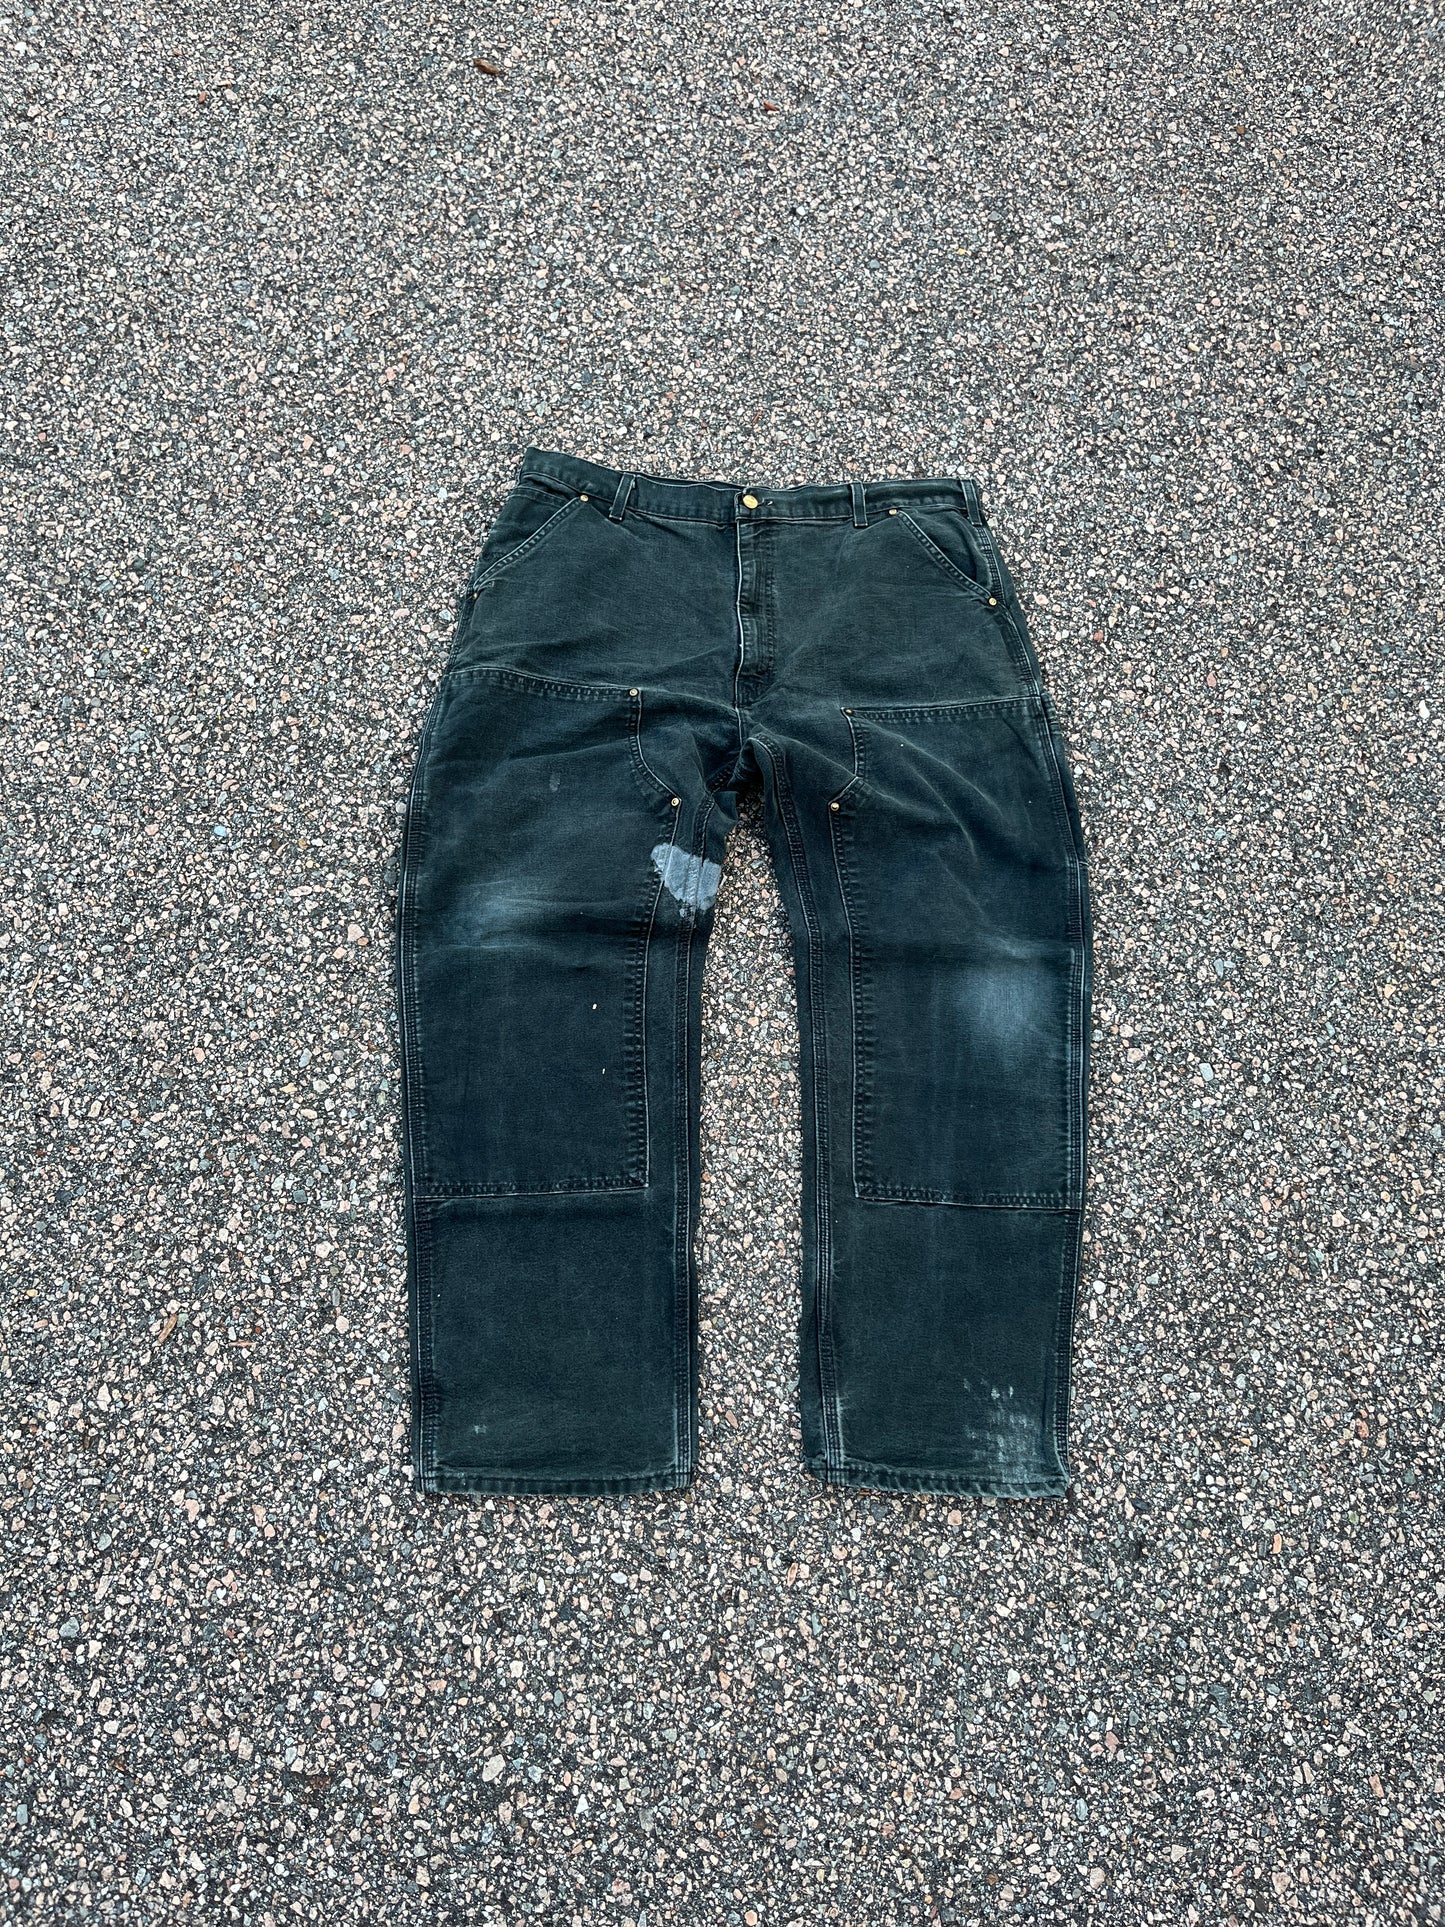 Faded Black Carhartt Double Knee Pants - 39 x 30